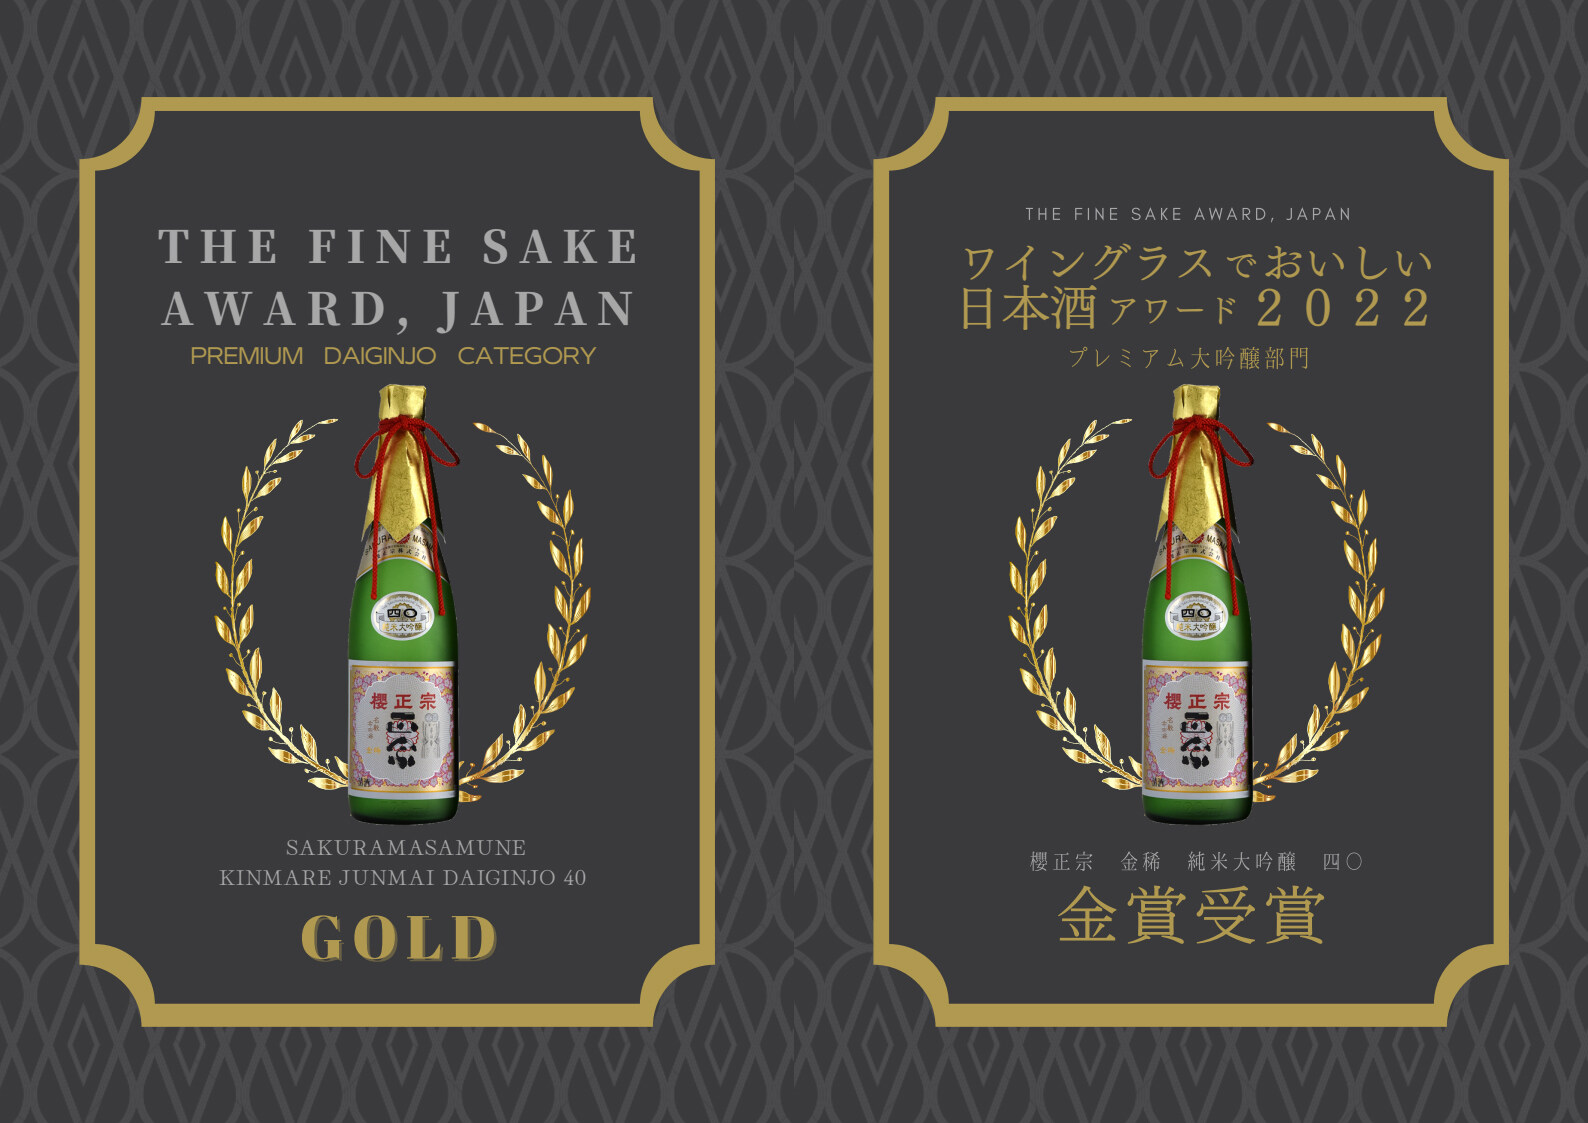 Sakuramasamune Kinmare Junmaidaiginjo 40 wins the Fine SAKE Award